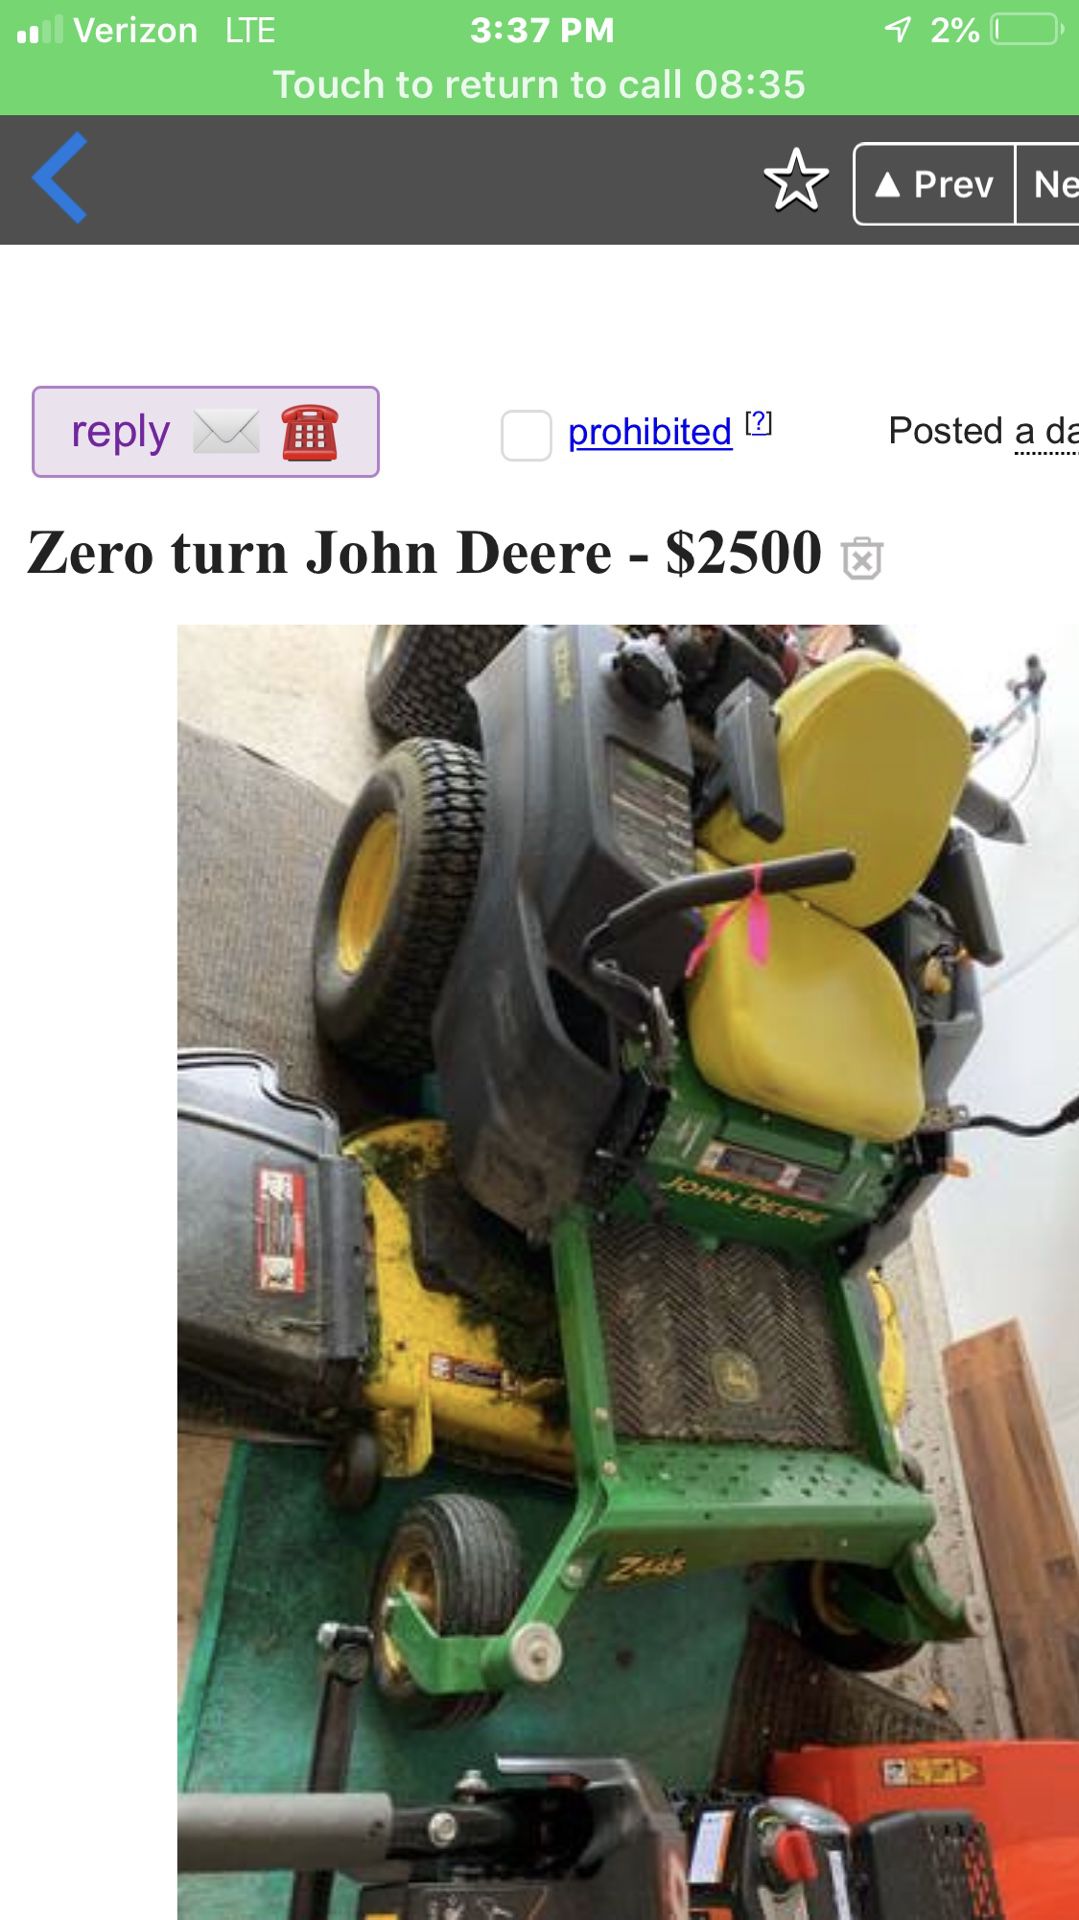 John Deere Z4450 turn mower runs great 27 hp engine 54 inch cut